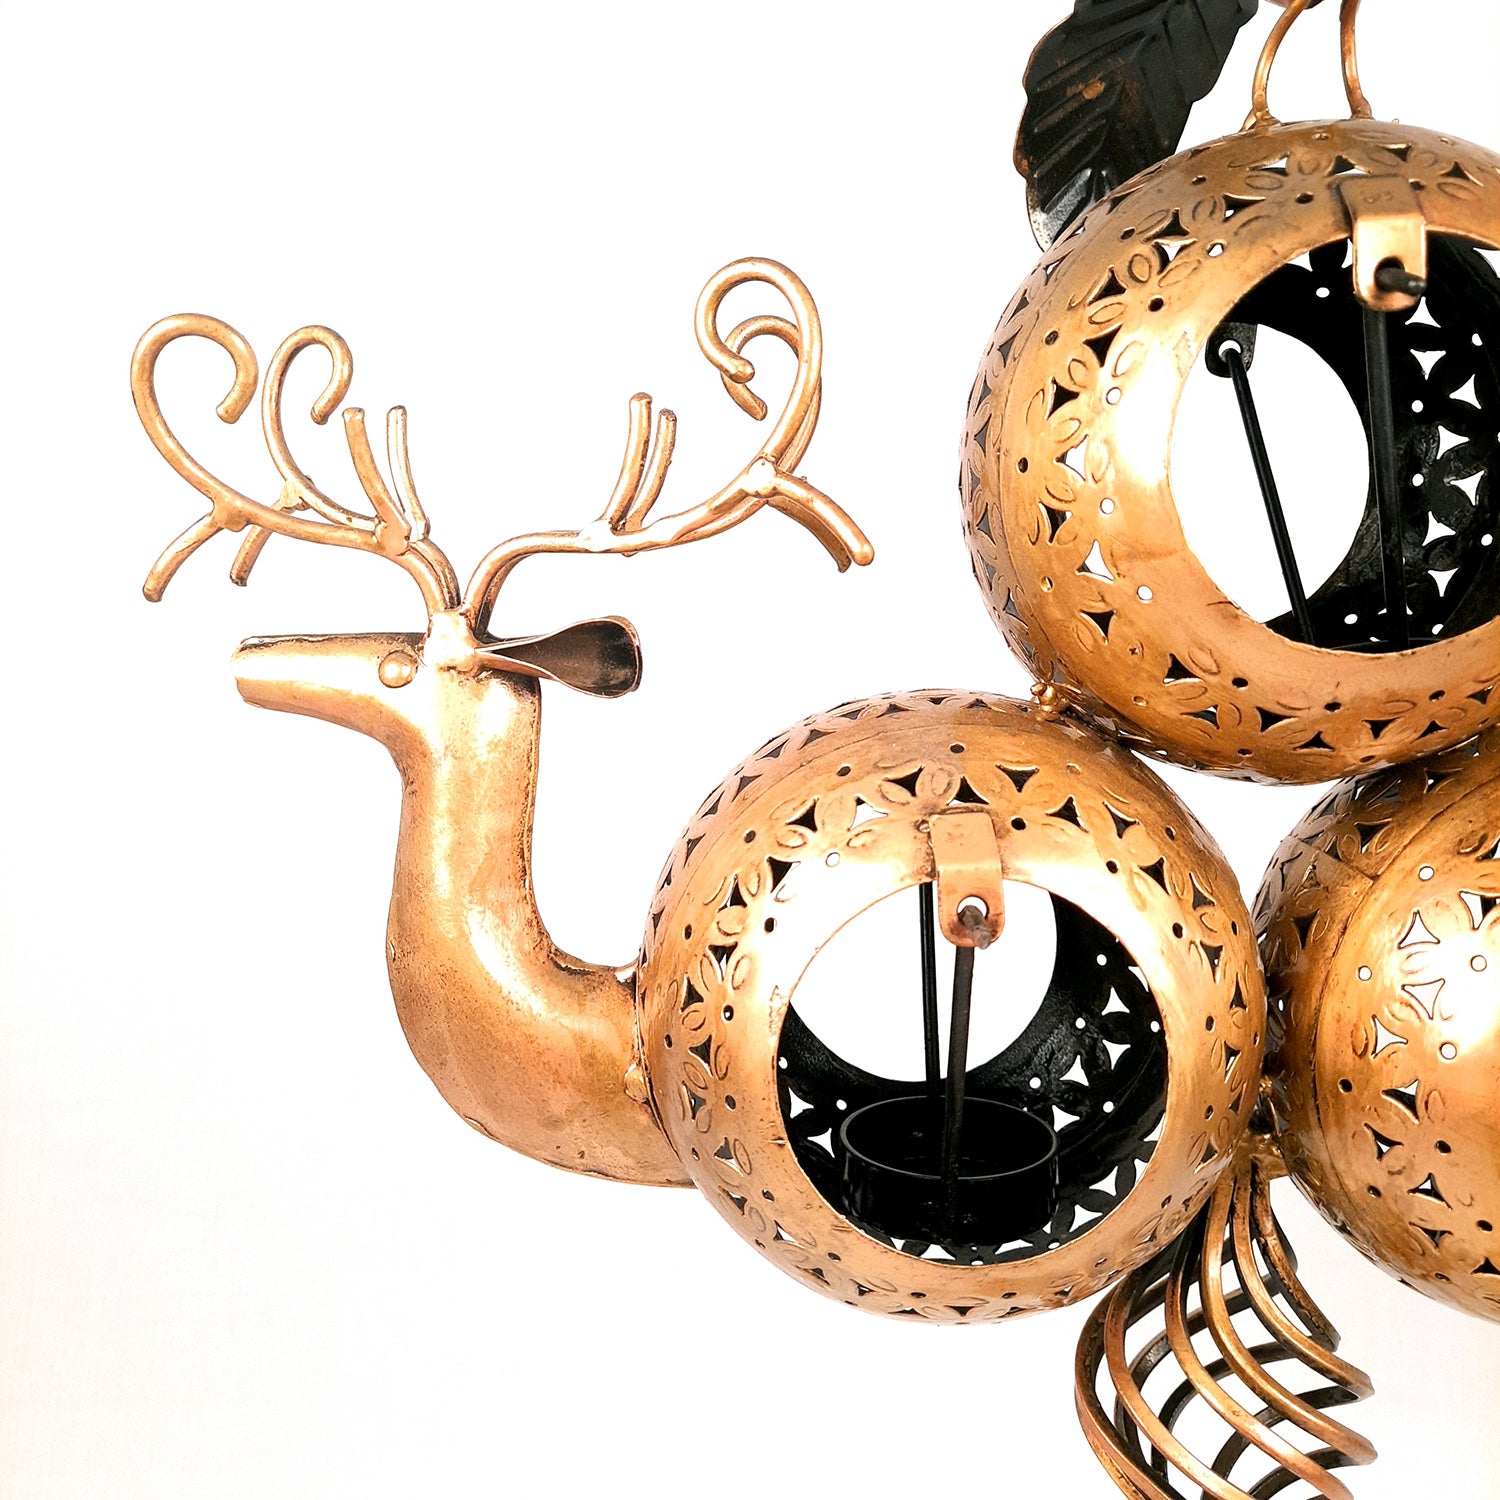 Tealight Holder Cum Decorative Showpiece - Deer Design | T Light Candle Stand with 3 Slots - For Home, Living Room, Corner Decor & Gifts - 24 Inch - Apkamart